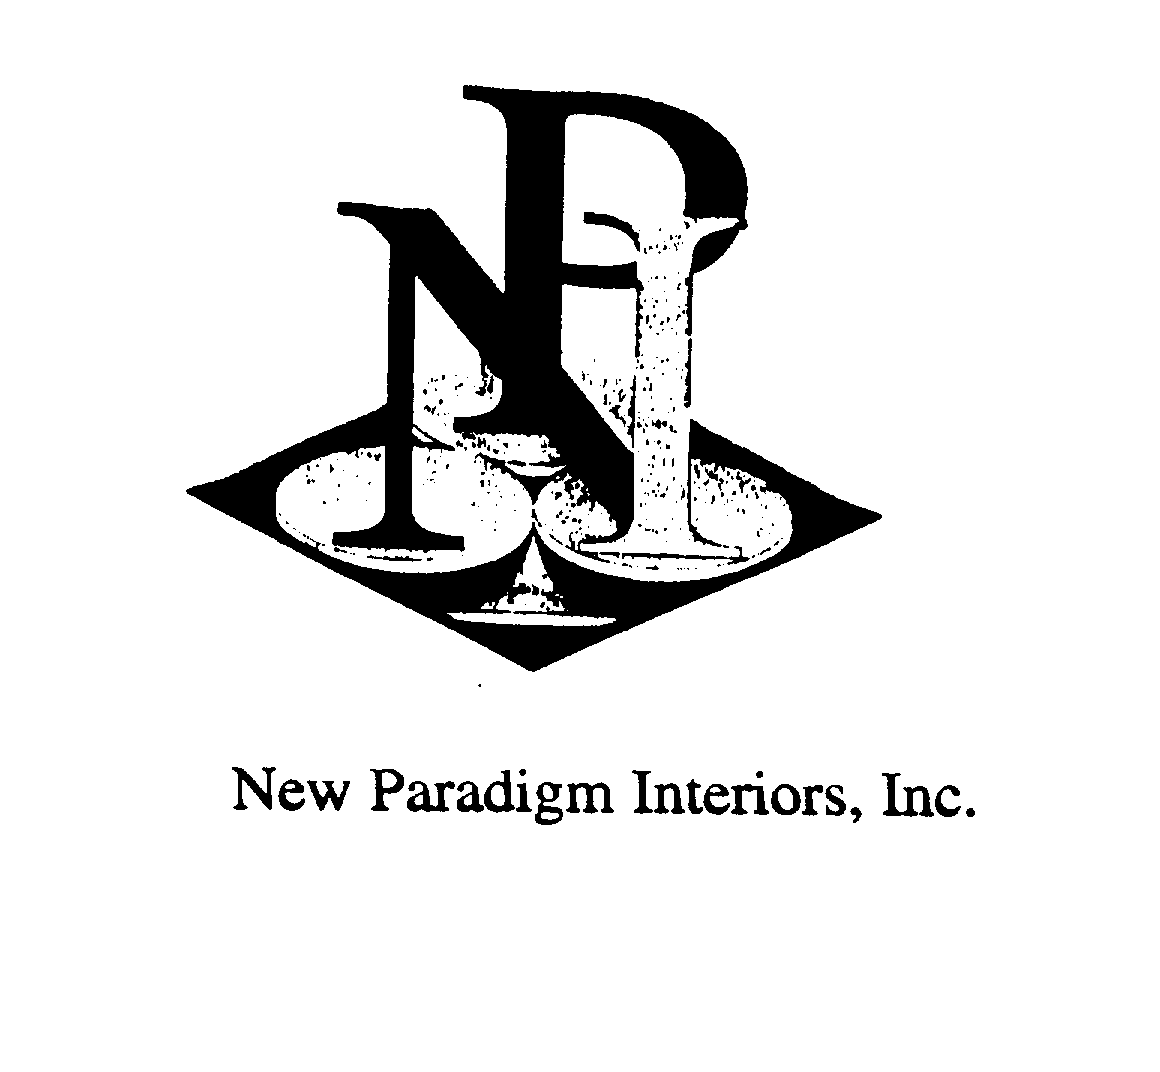  NPI NEW PARADIGM INTERIORS, INC.